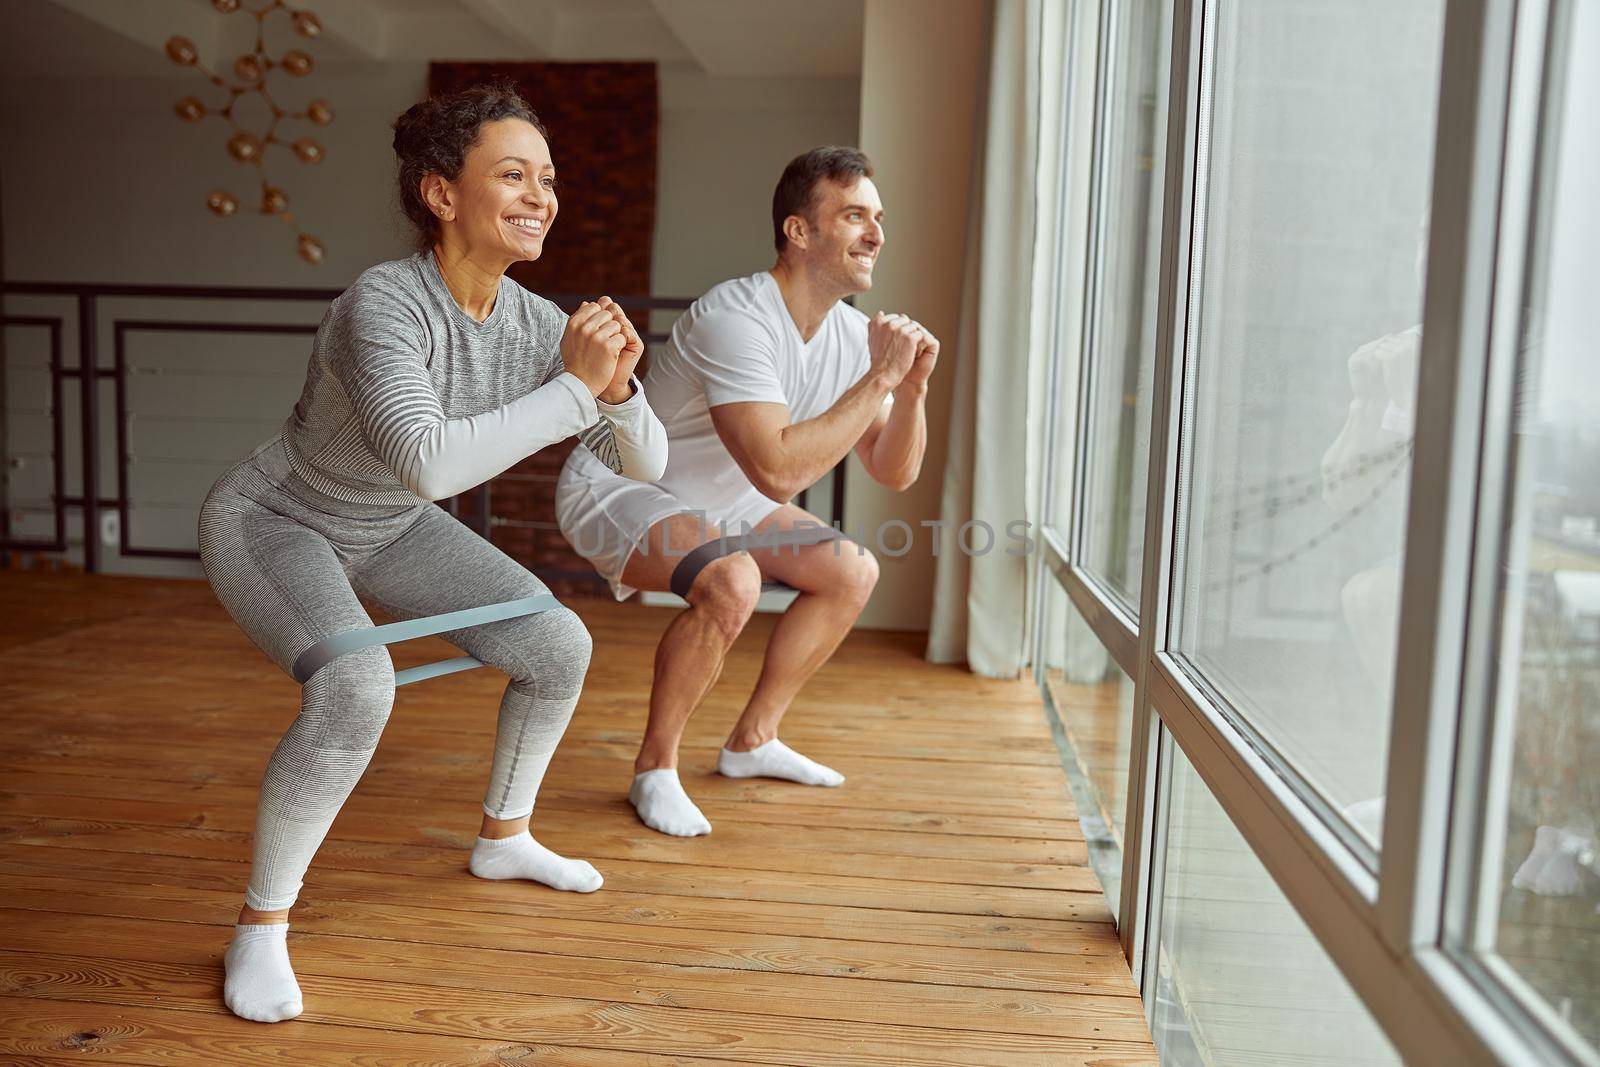 Joyful couple doing strength workout at home by Yaroslav_astakhov